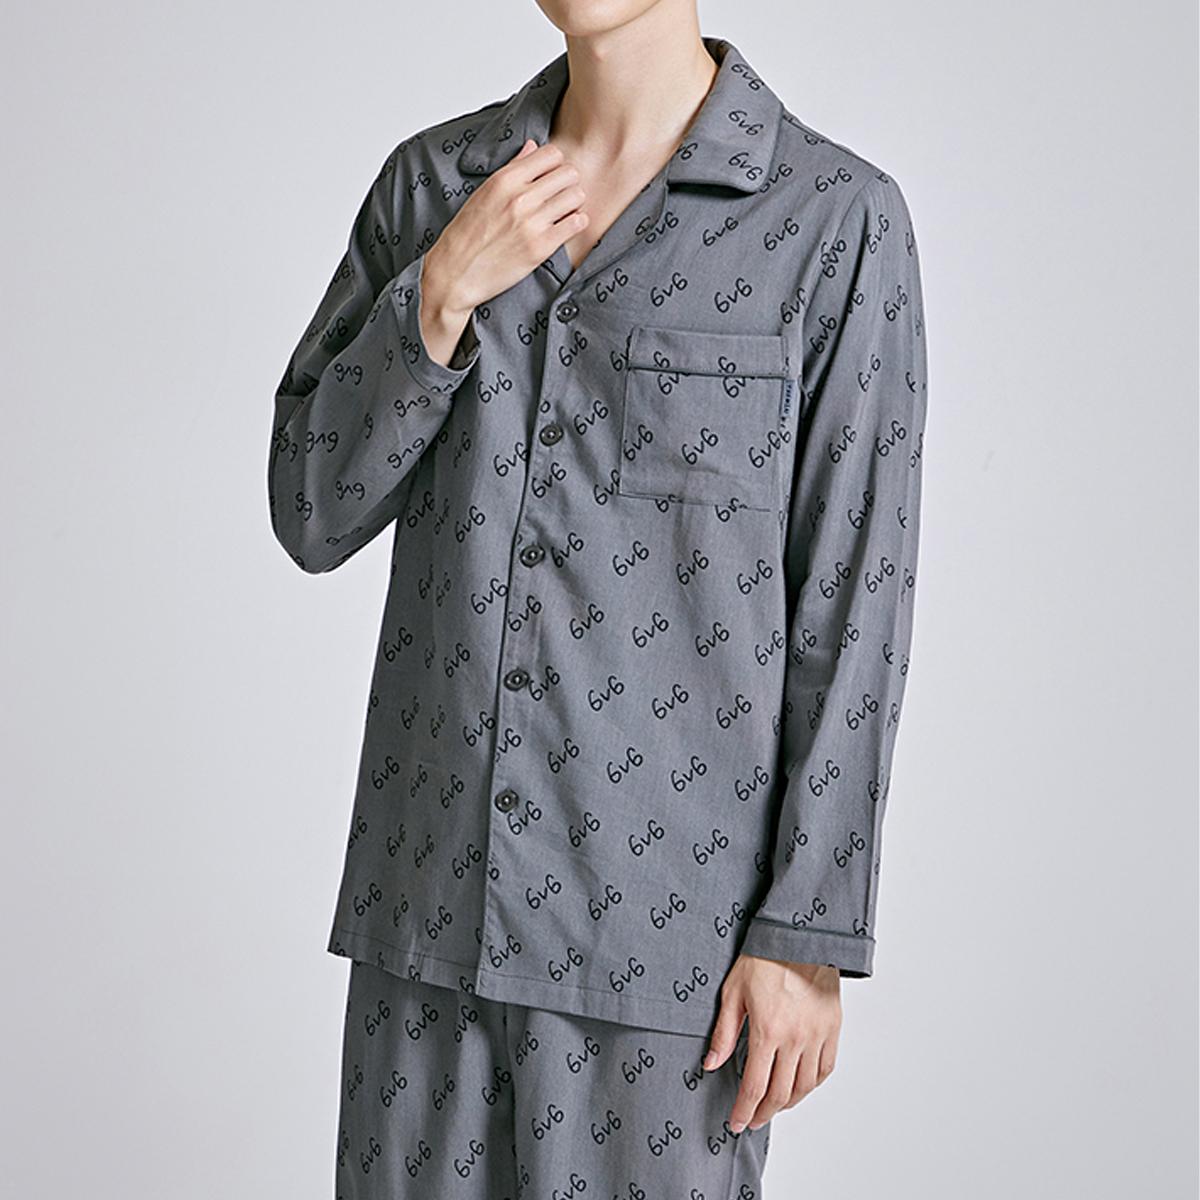 《SHINee泰民xSPAO聯名款》6v6長袖睡衣套裝